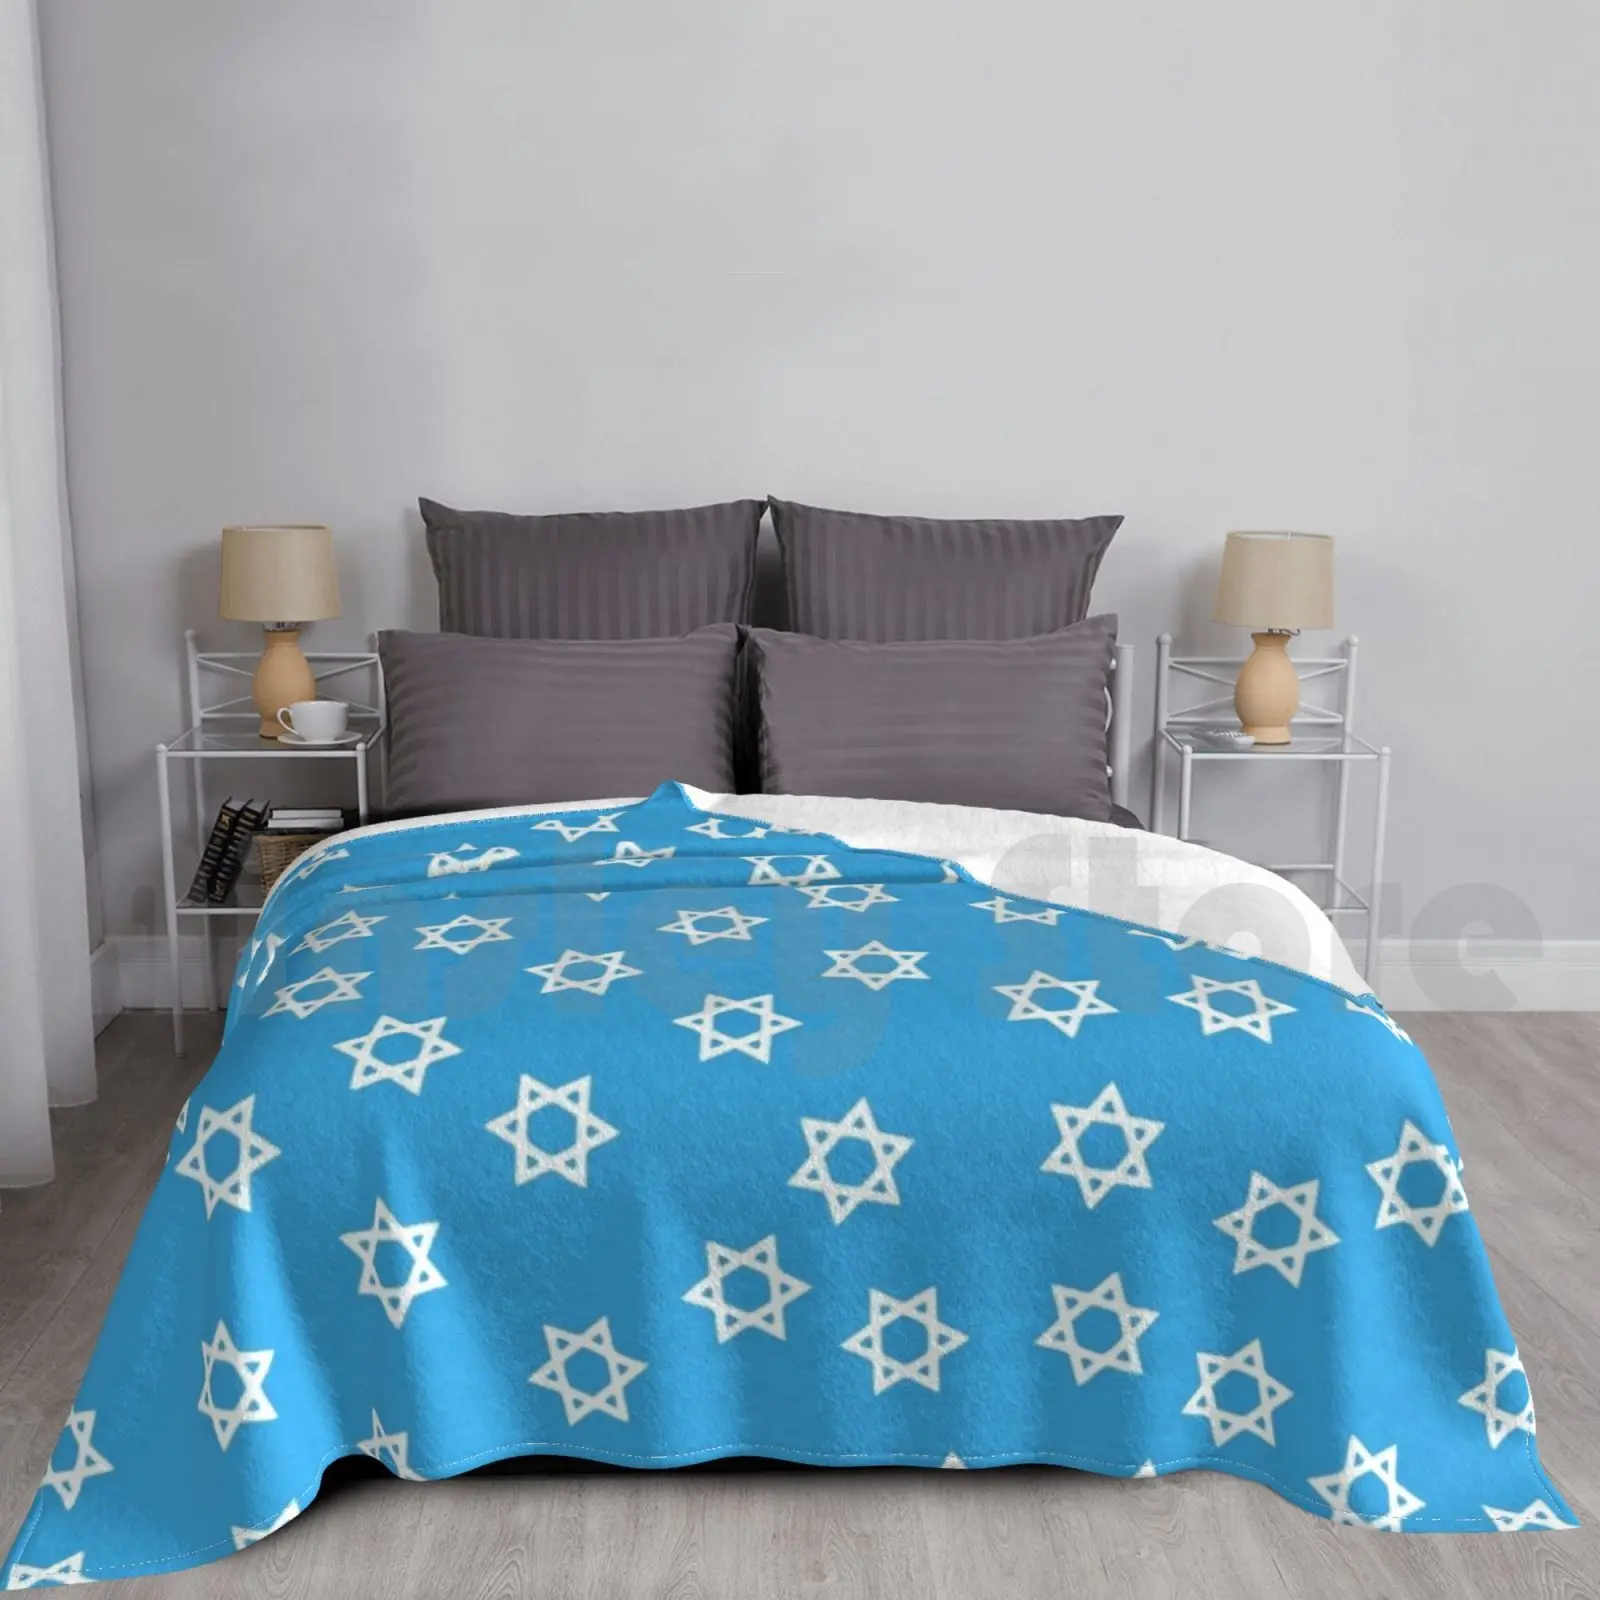 

David Blanket For Sofa Bed Travel Hanukkah David Star Chanukah Culture David Israel Menorah Jew Jewish David